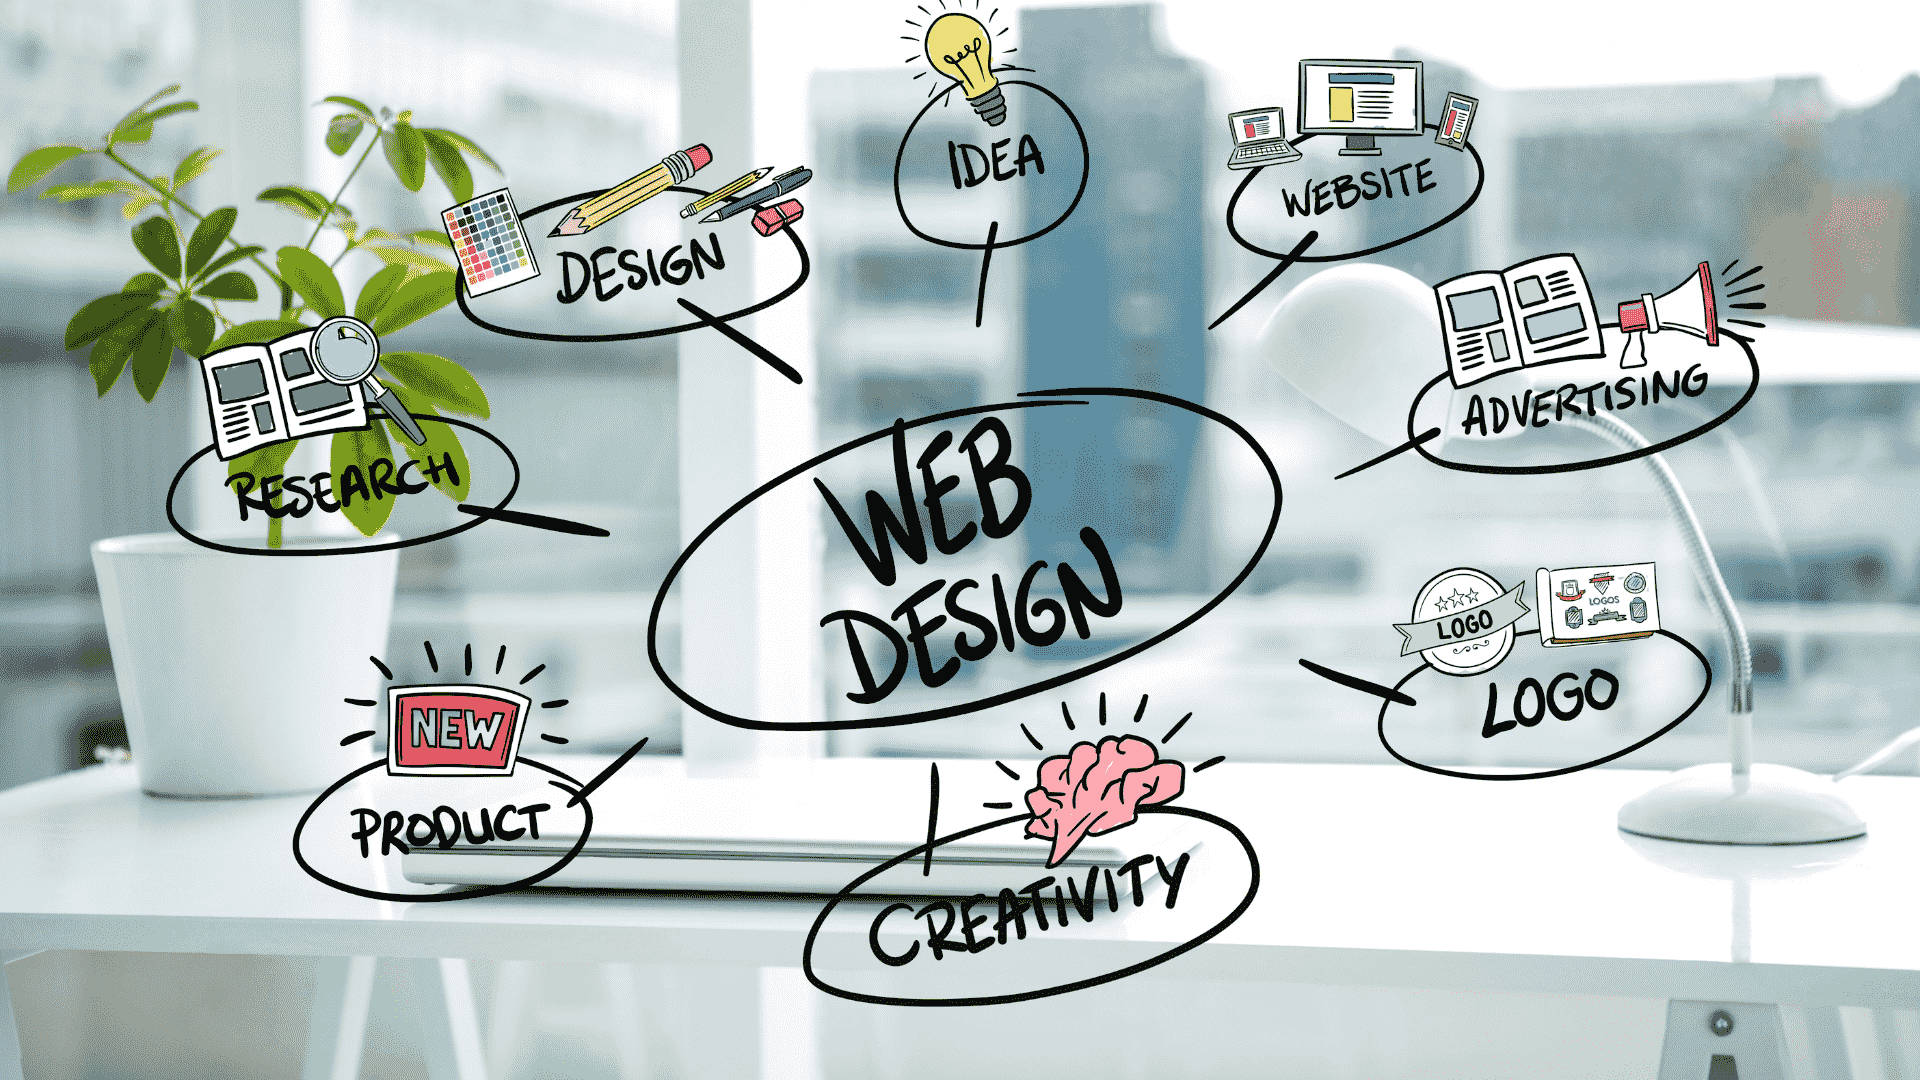 Web design companies